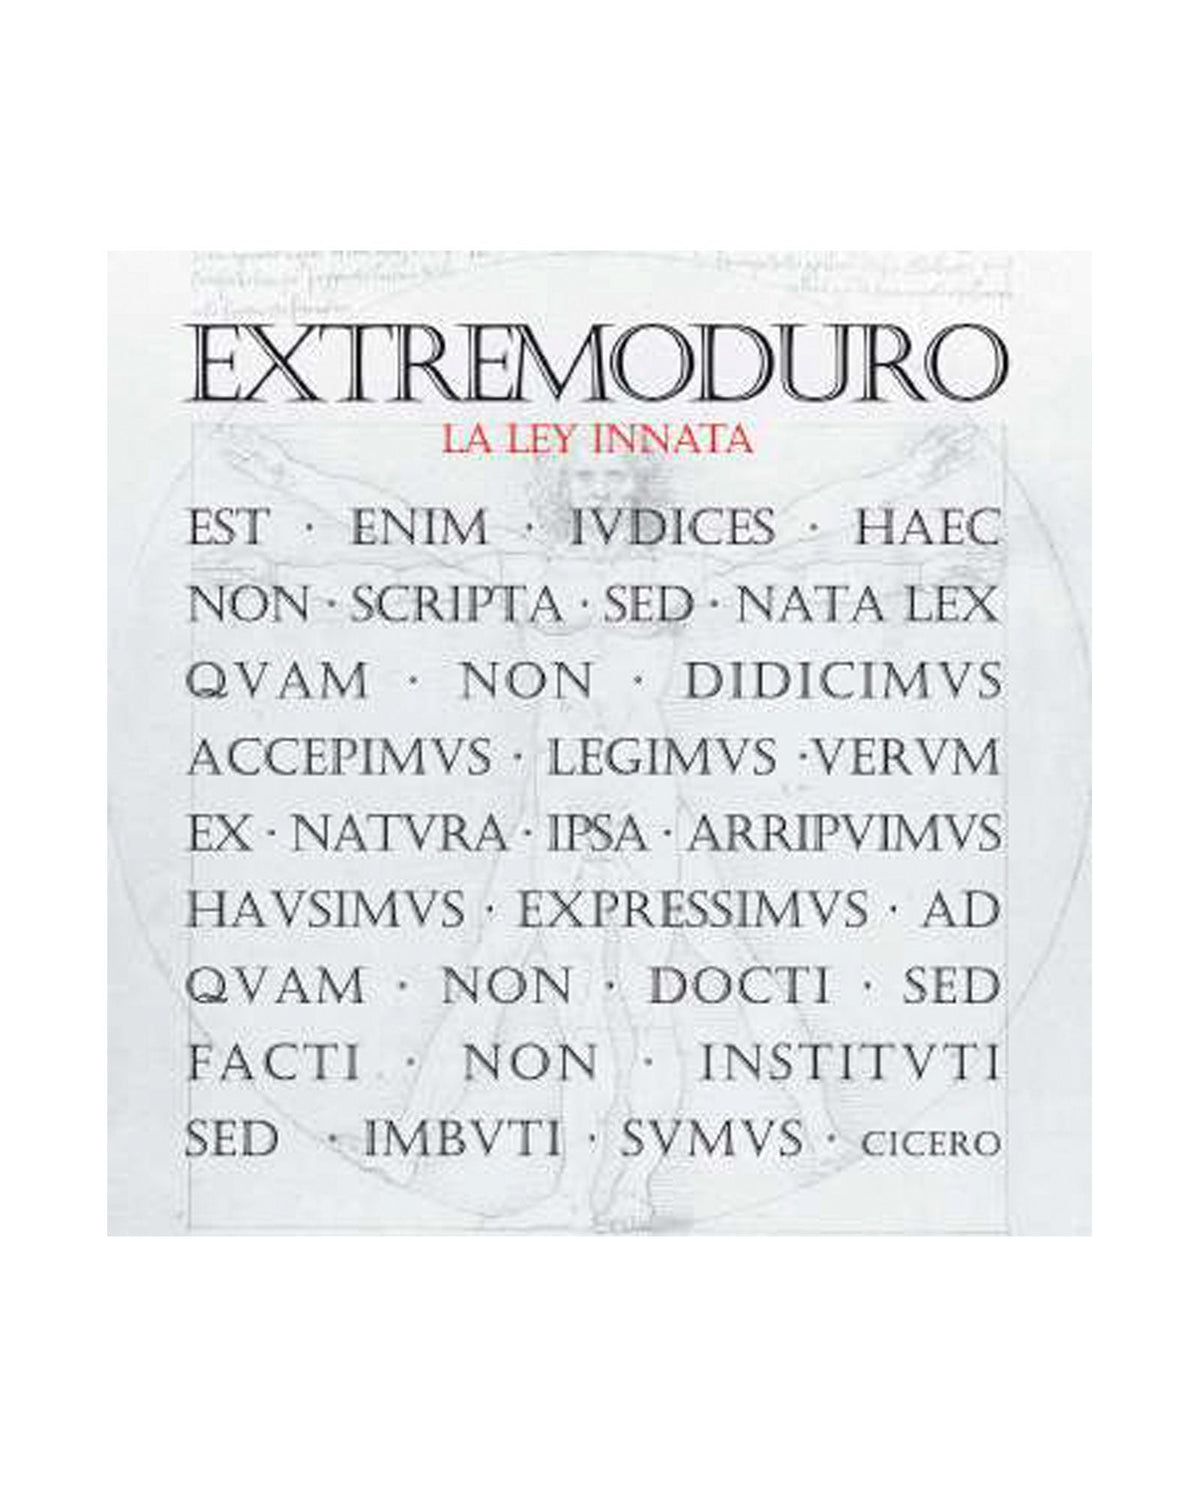 Extremoduro - LP Vinilo "La Ley Innata" - D2fy · Rocktud - Rocktud